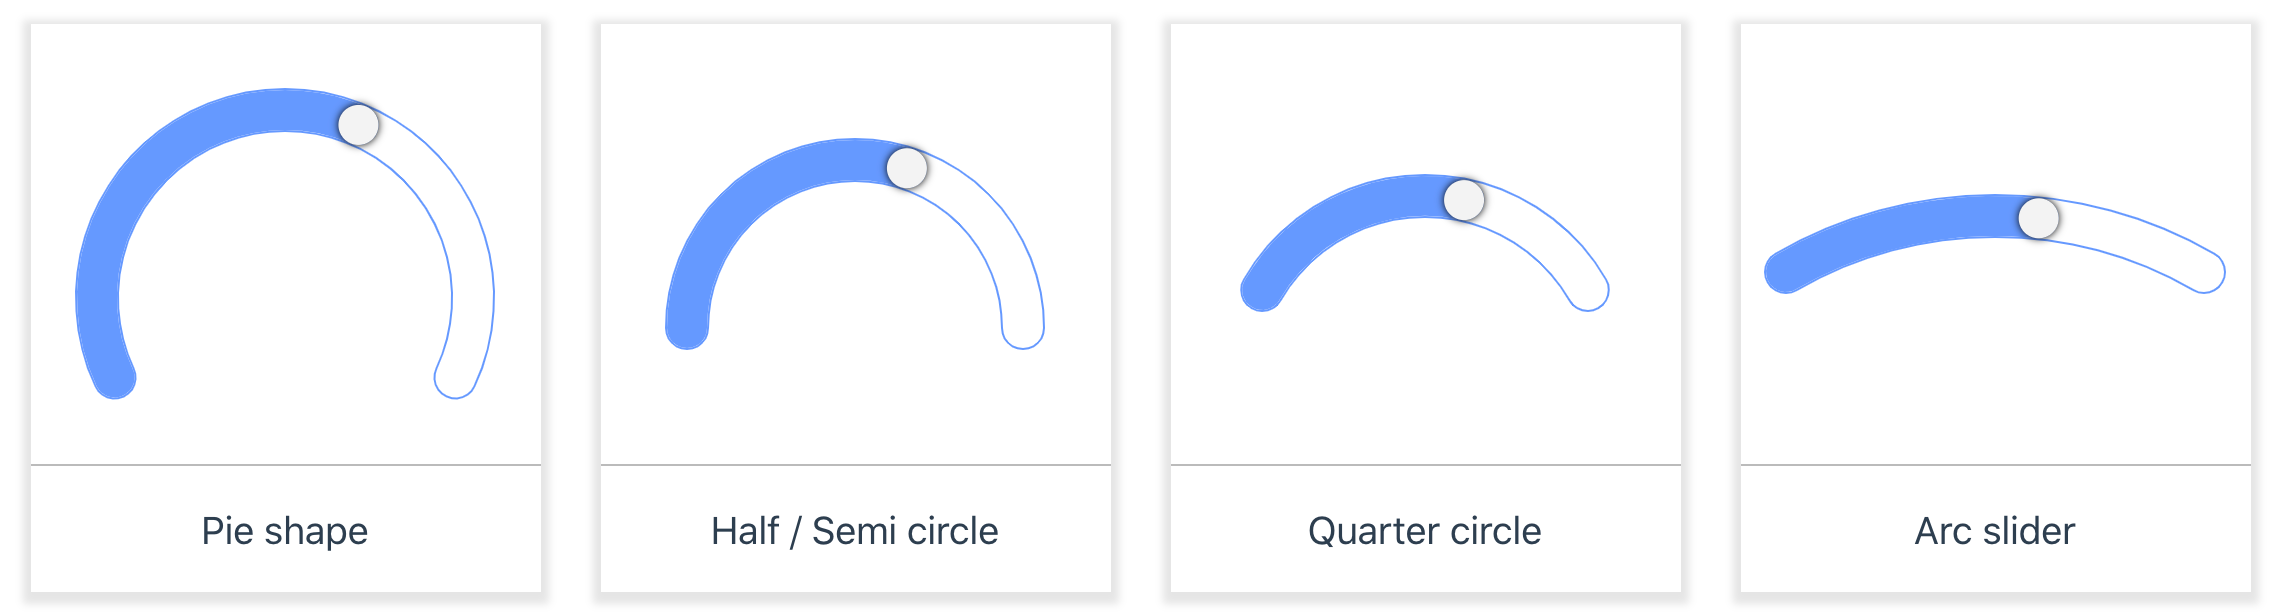 vue-three-round-slider - different circle shapes - pie shape, half or semi-circle, quarter and arc slider